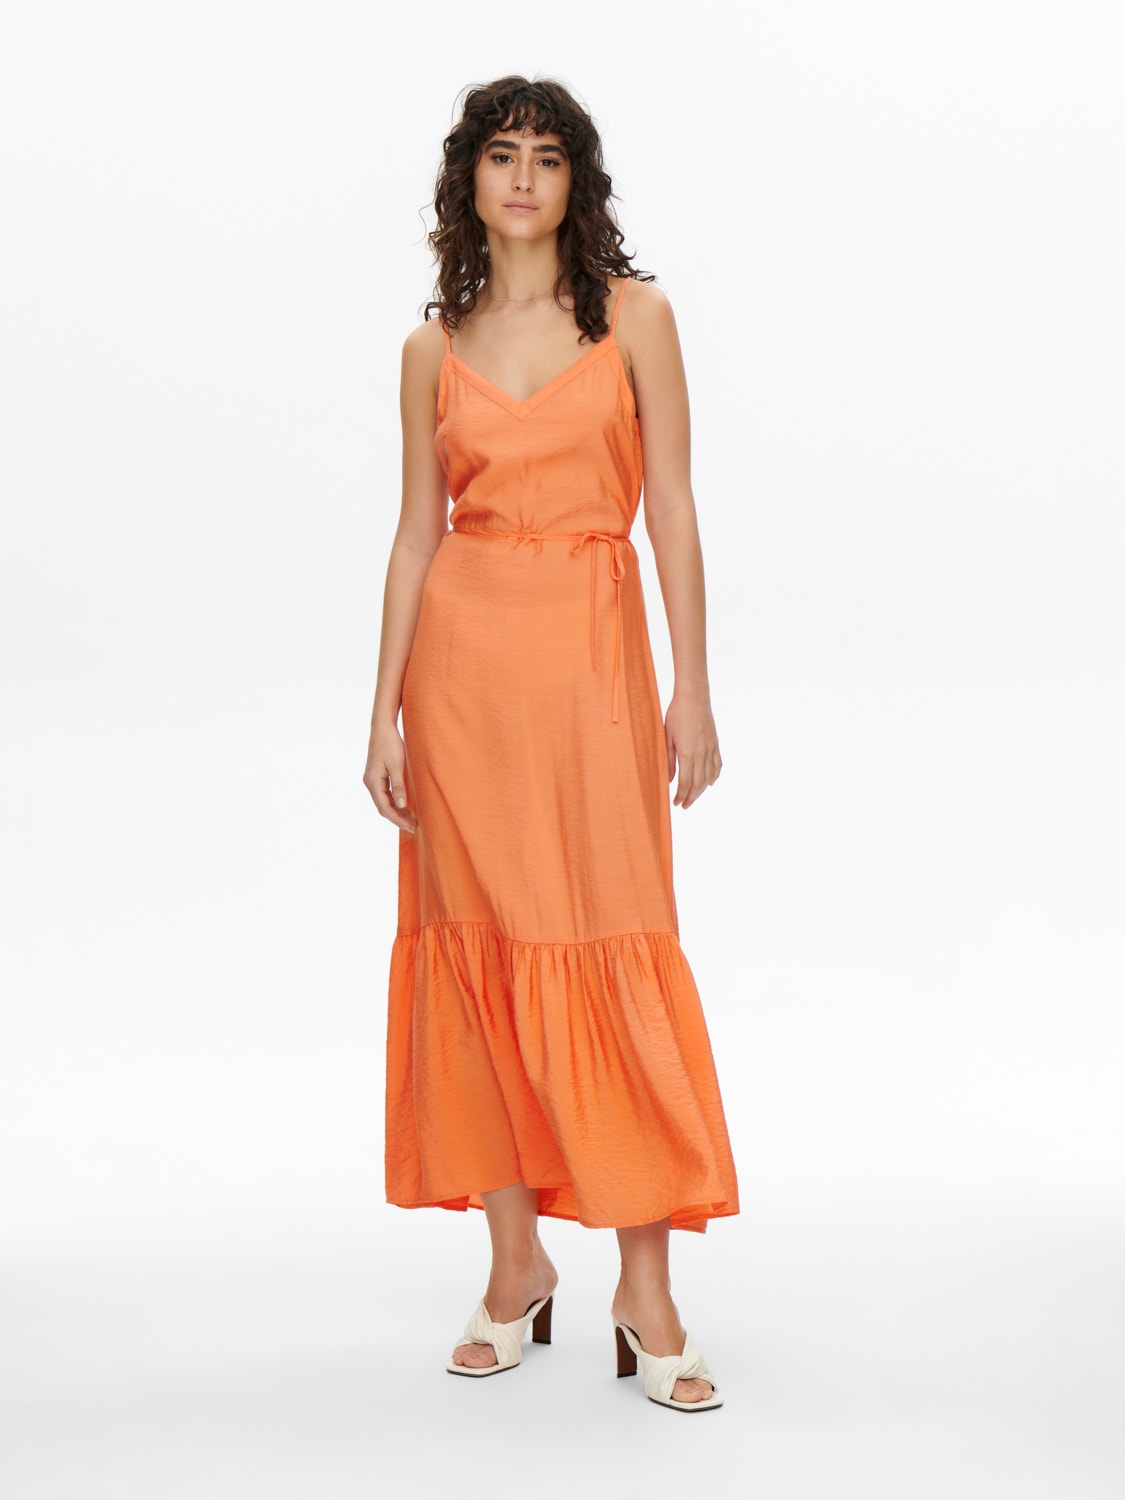 ONLY Strap Maxi dress -Nectarine - 15254854